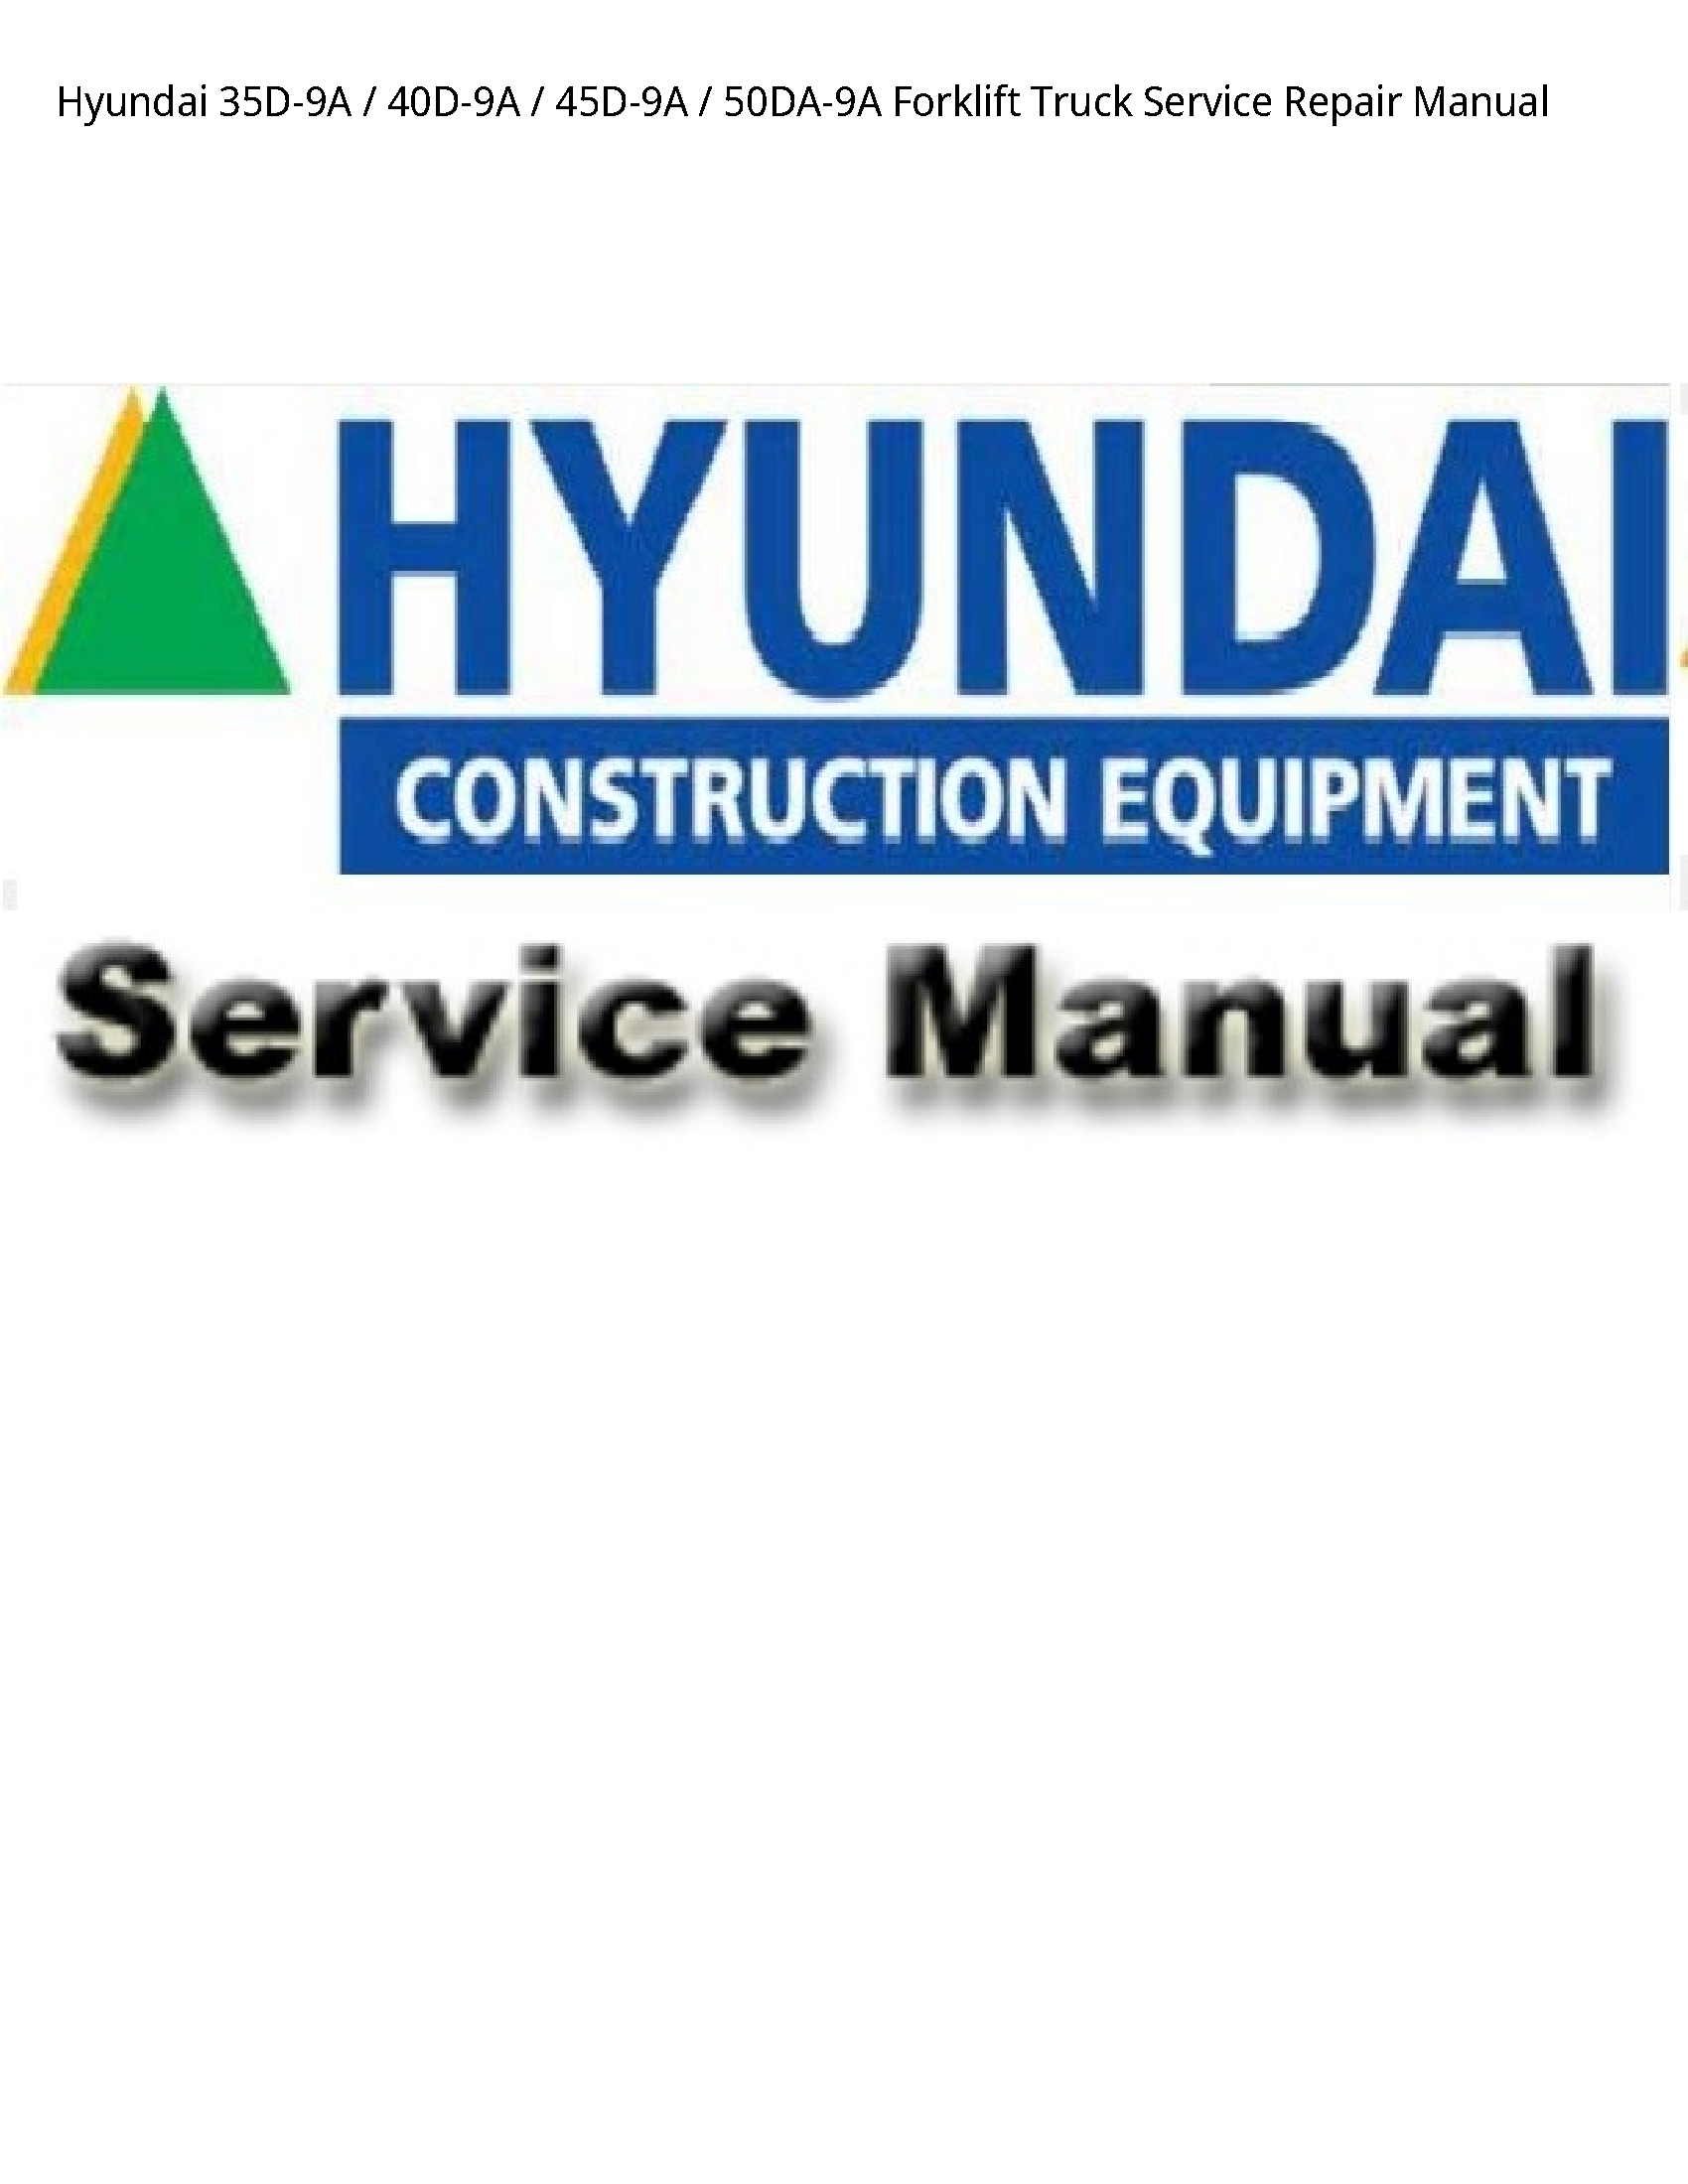 Hyundai 35D-9A Forklift Truck manual